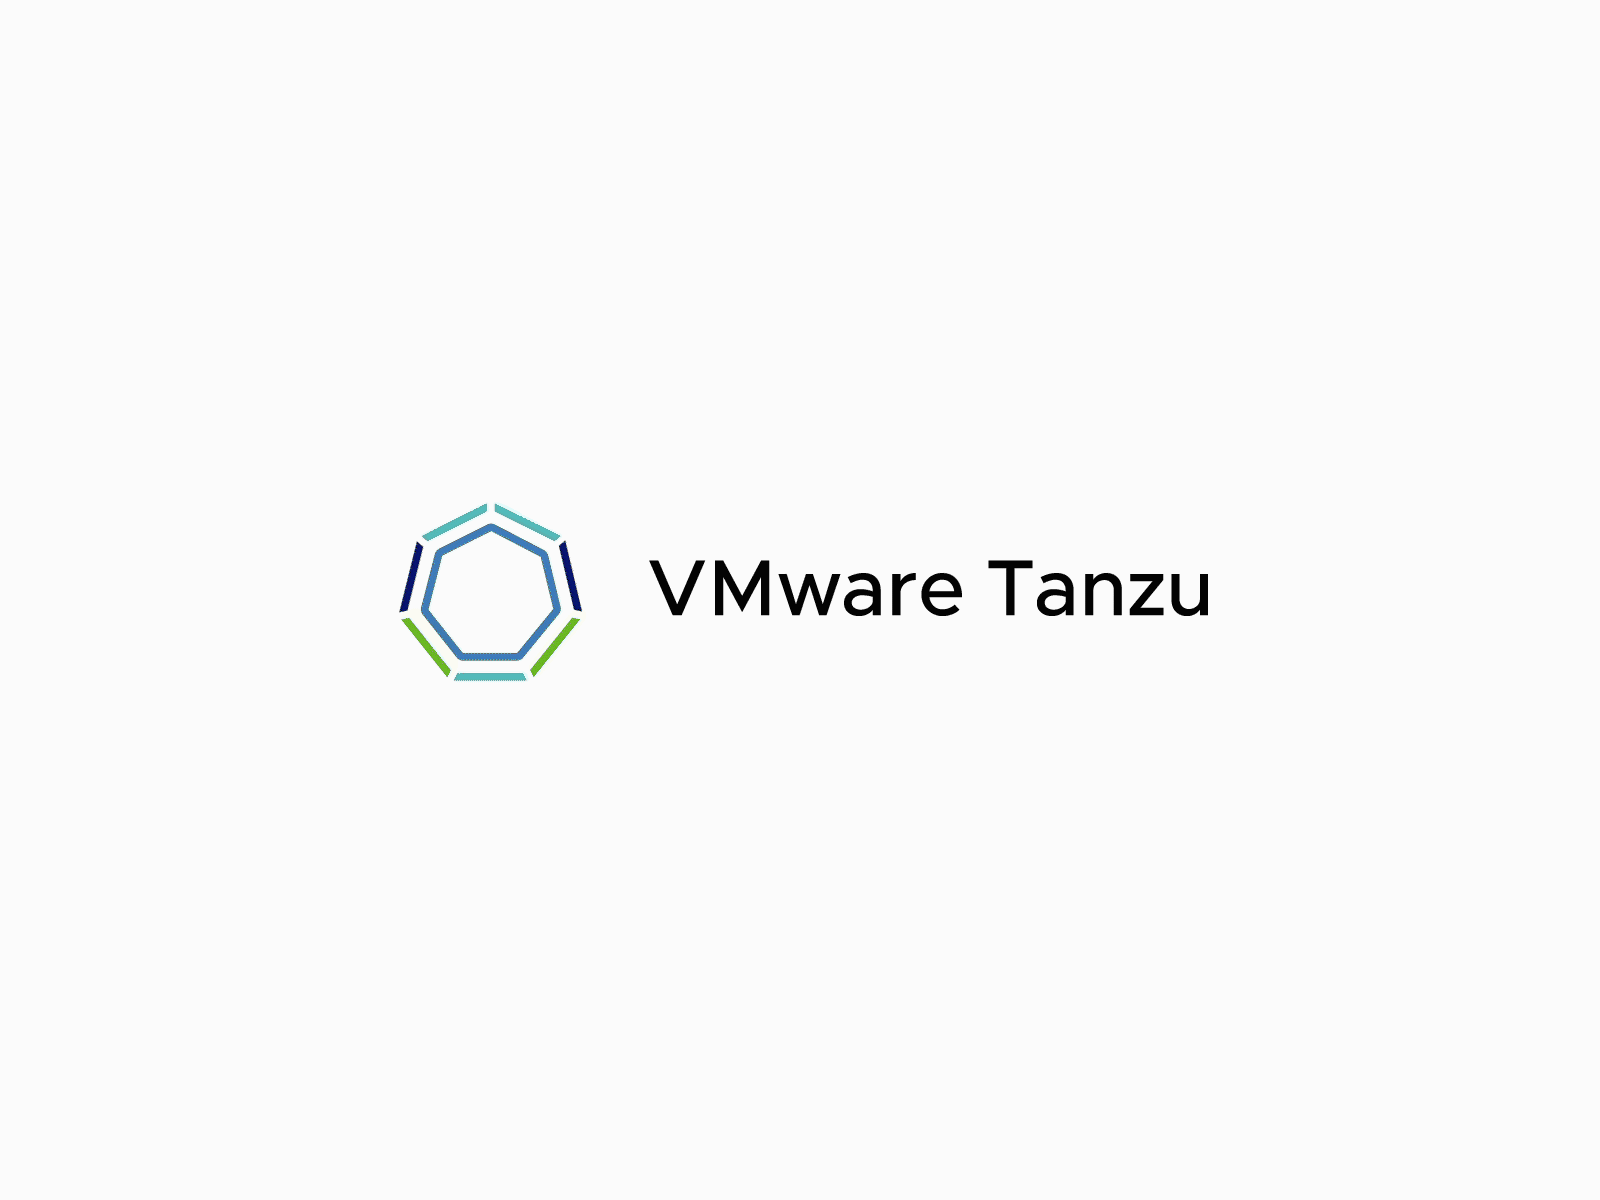 VMware Tanzu logo animation